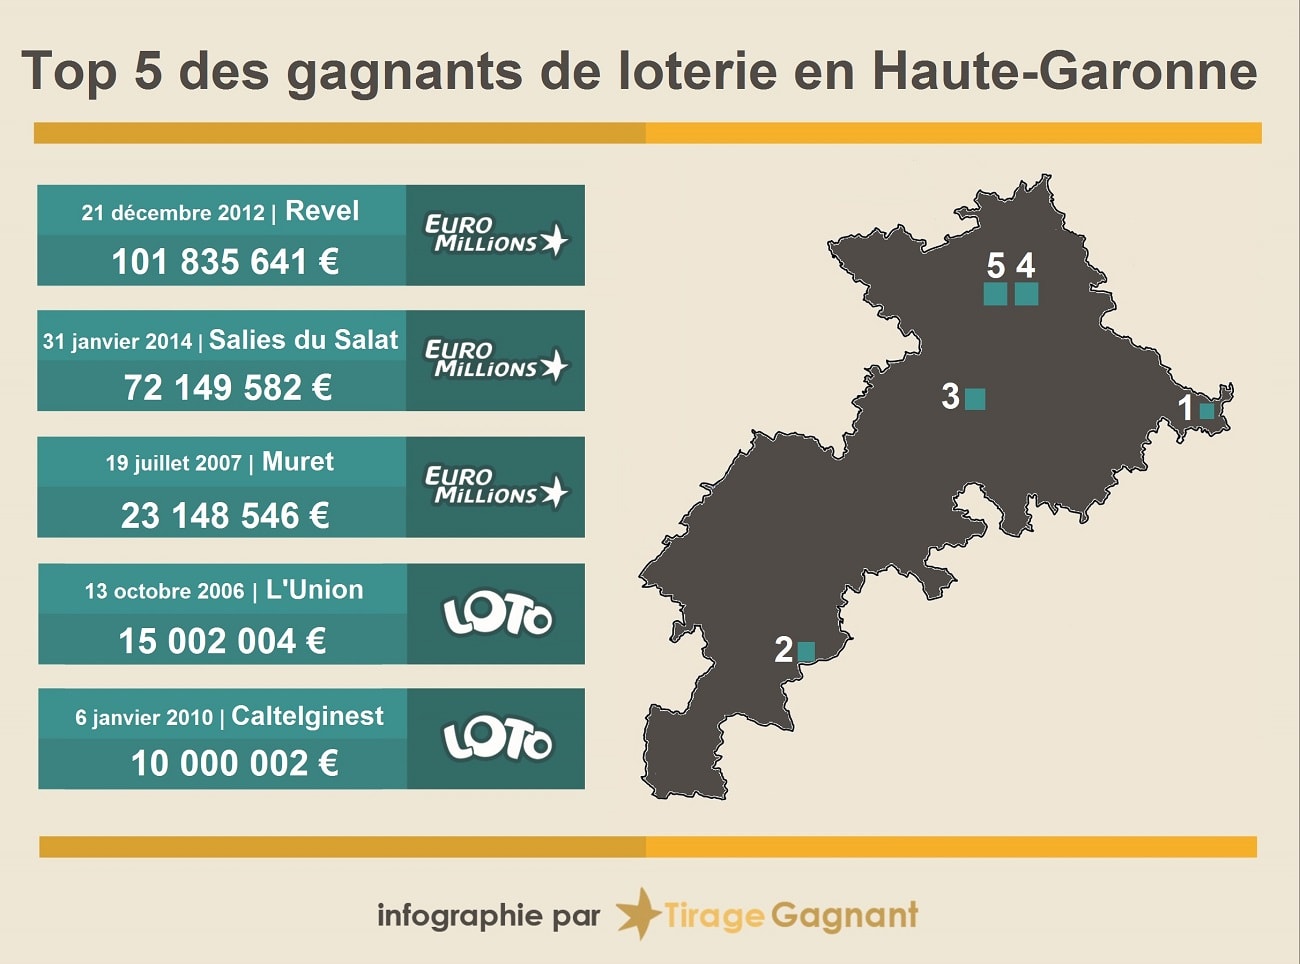 Top 5 gagnants à la loterie en Haute-Garonne